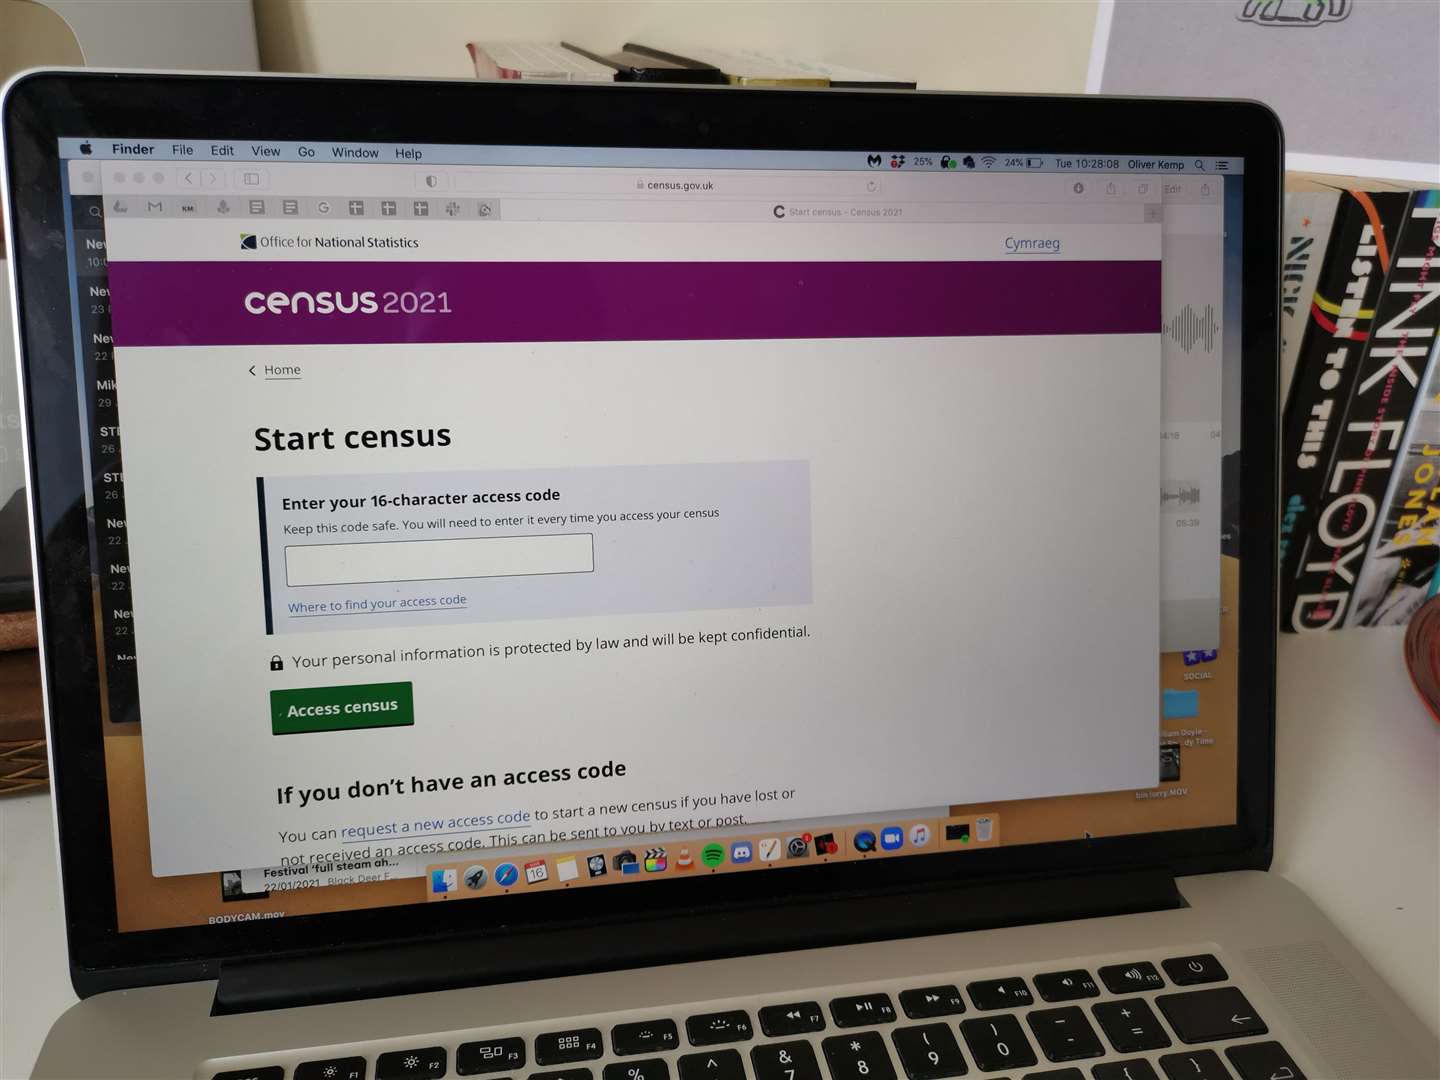 The Census 2021 online portal